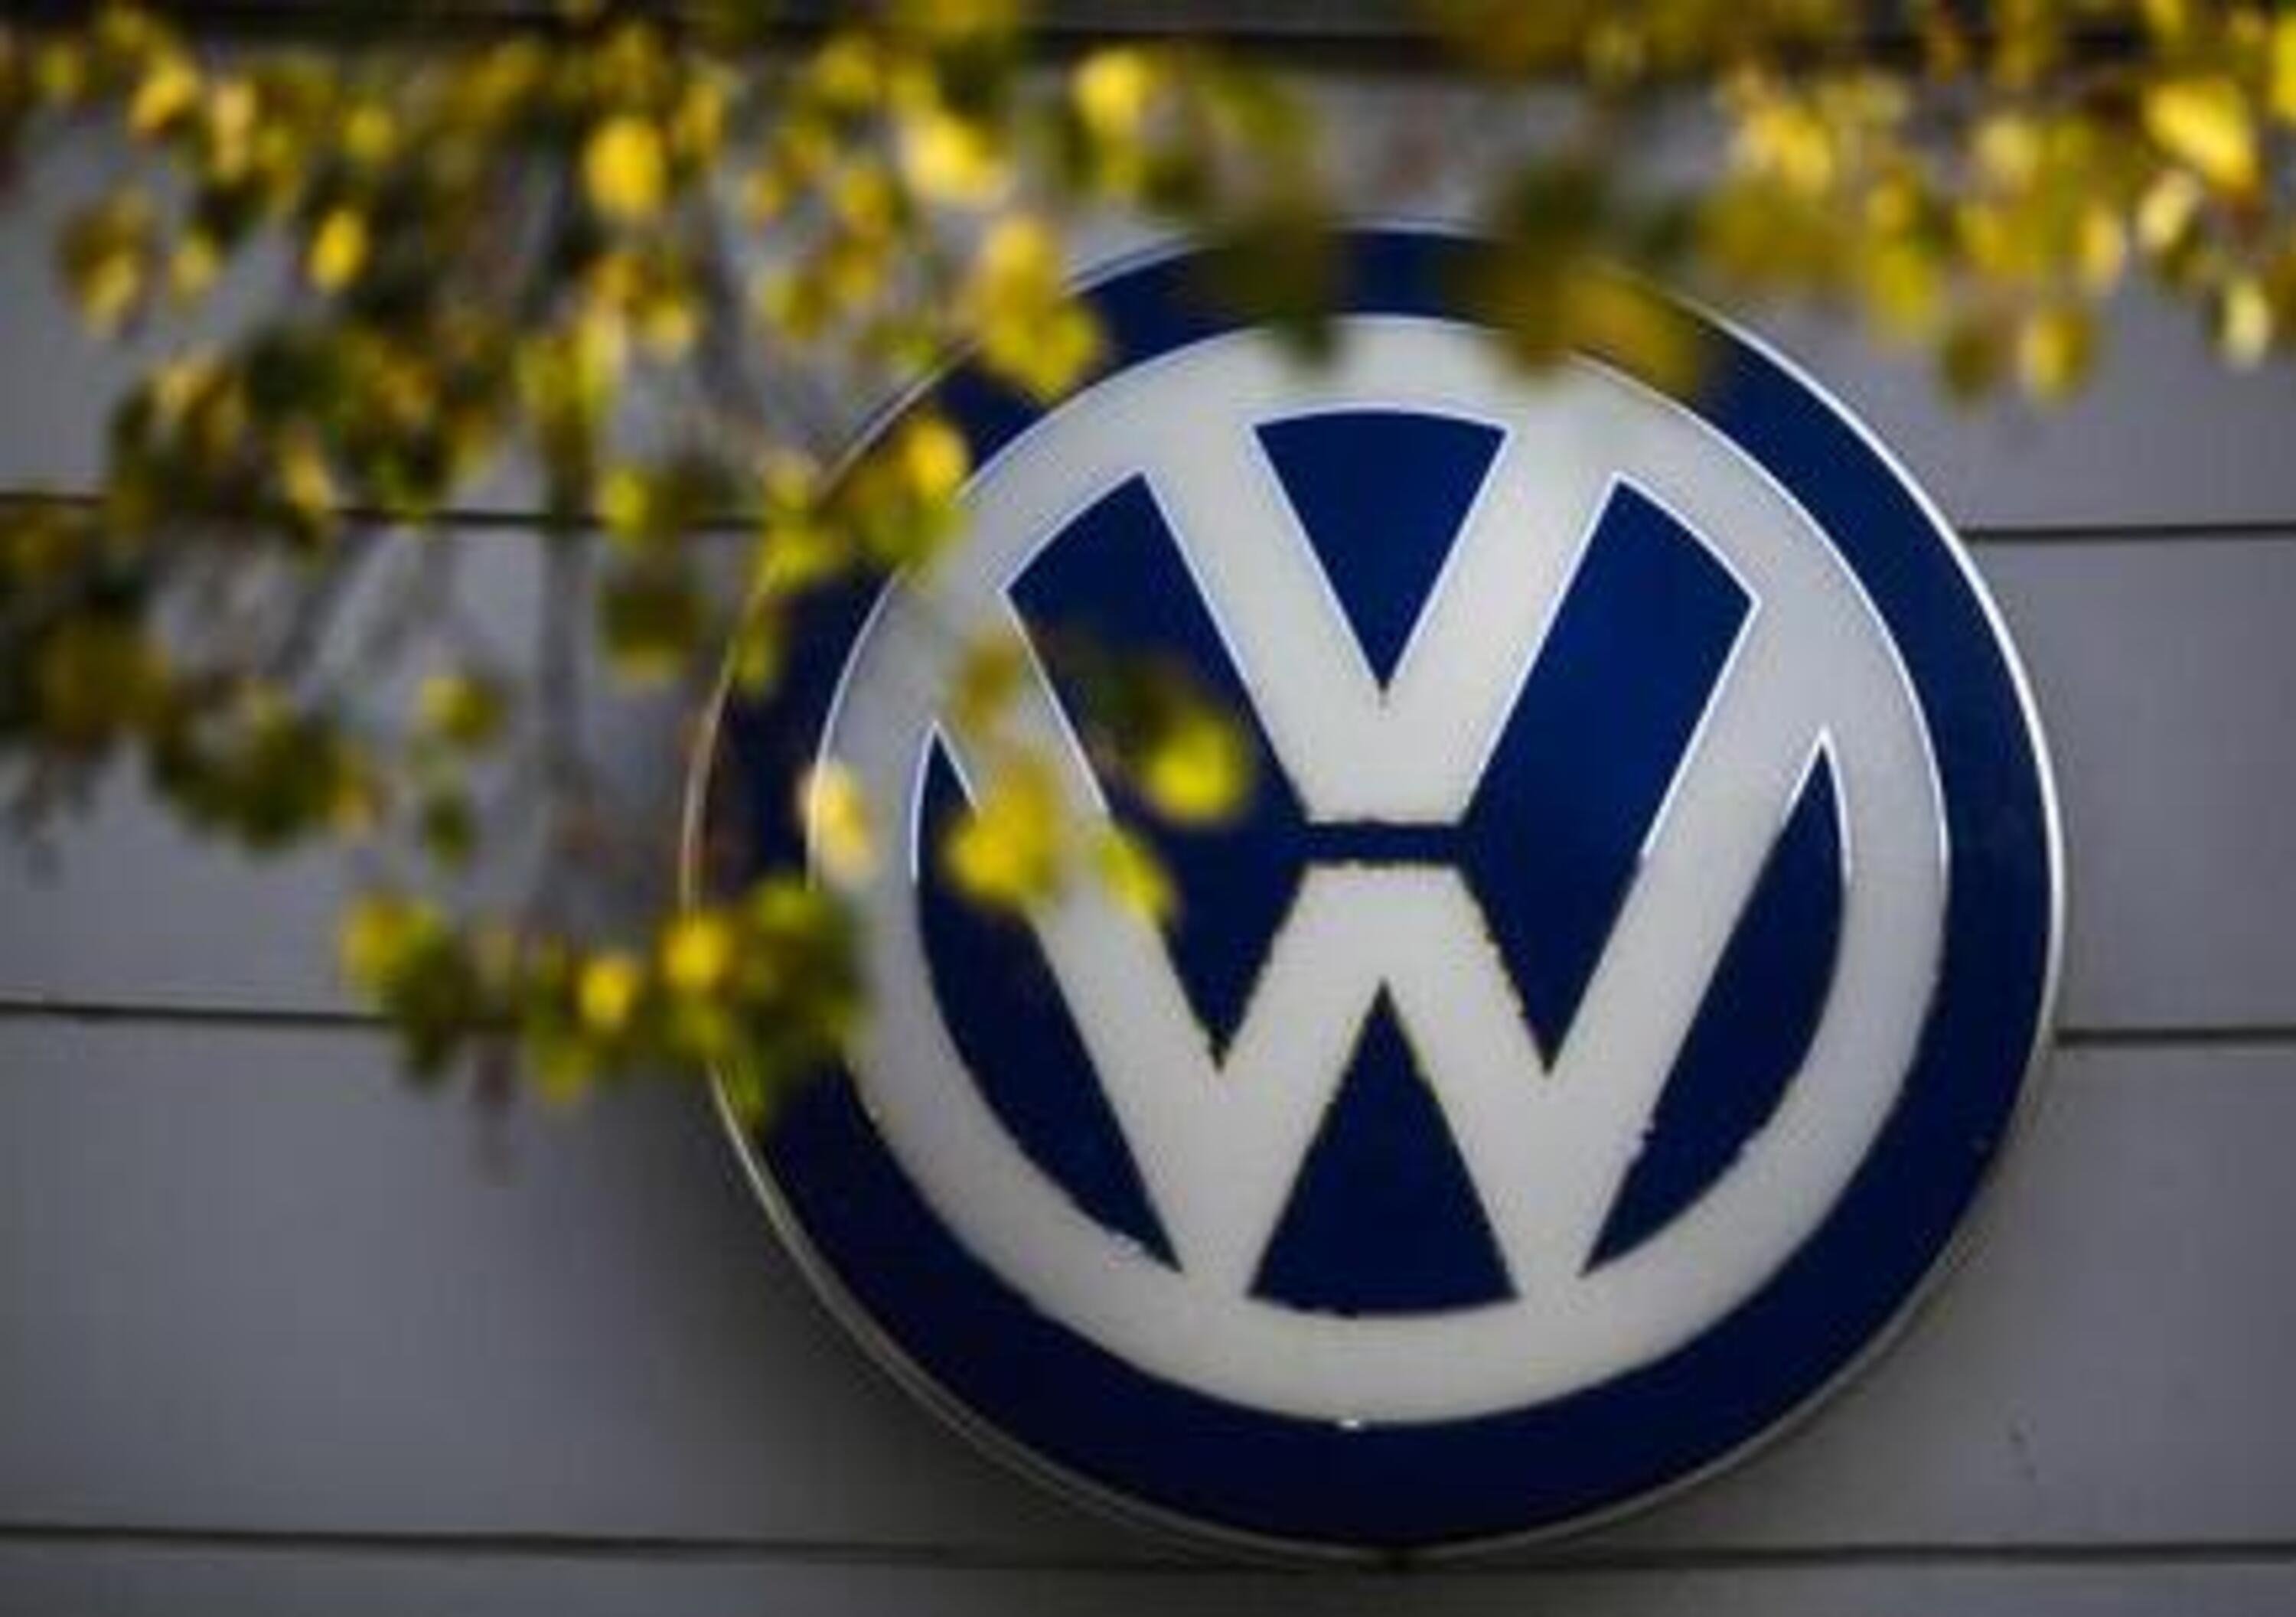 Volkswagen, arriva la prima sentenza in Spagna